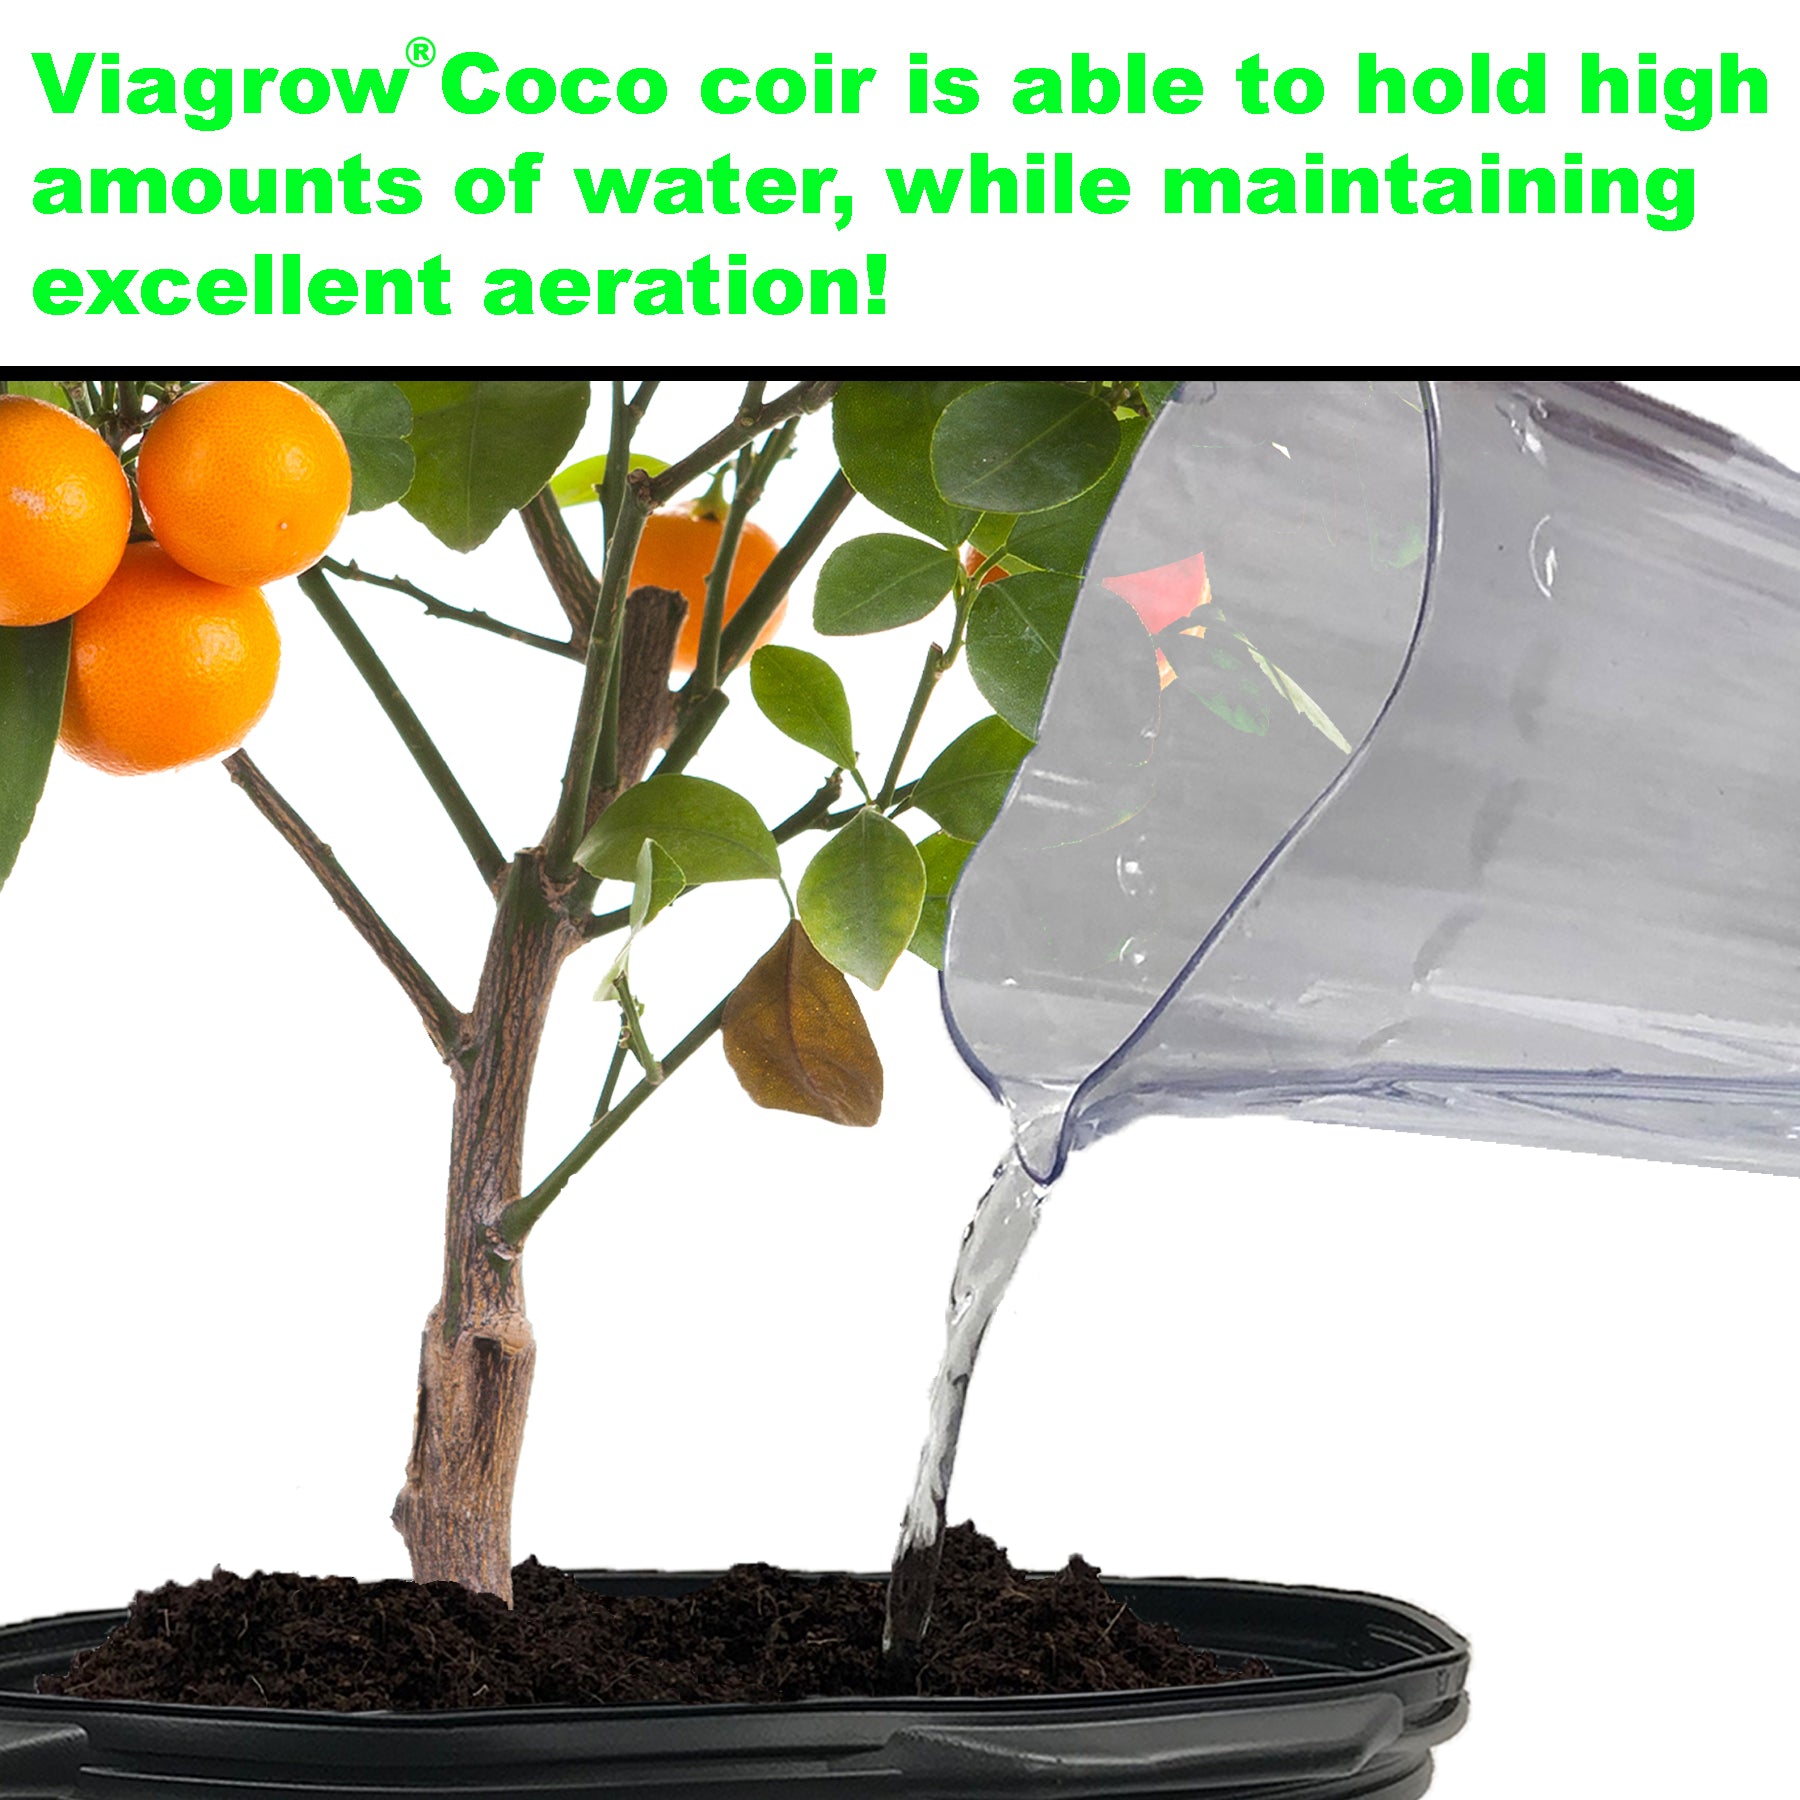 Viagrow 1/2 Gallon Nursery Pot Container Garden, (0.62 gal/2.5qt/2.37), 50-Pack with Coconut Coir